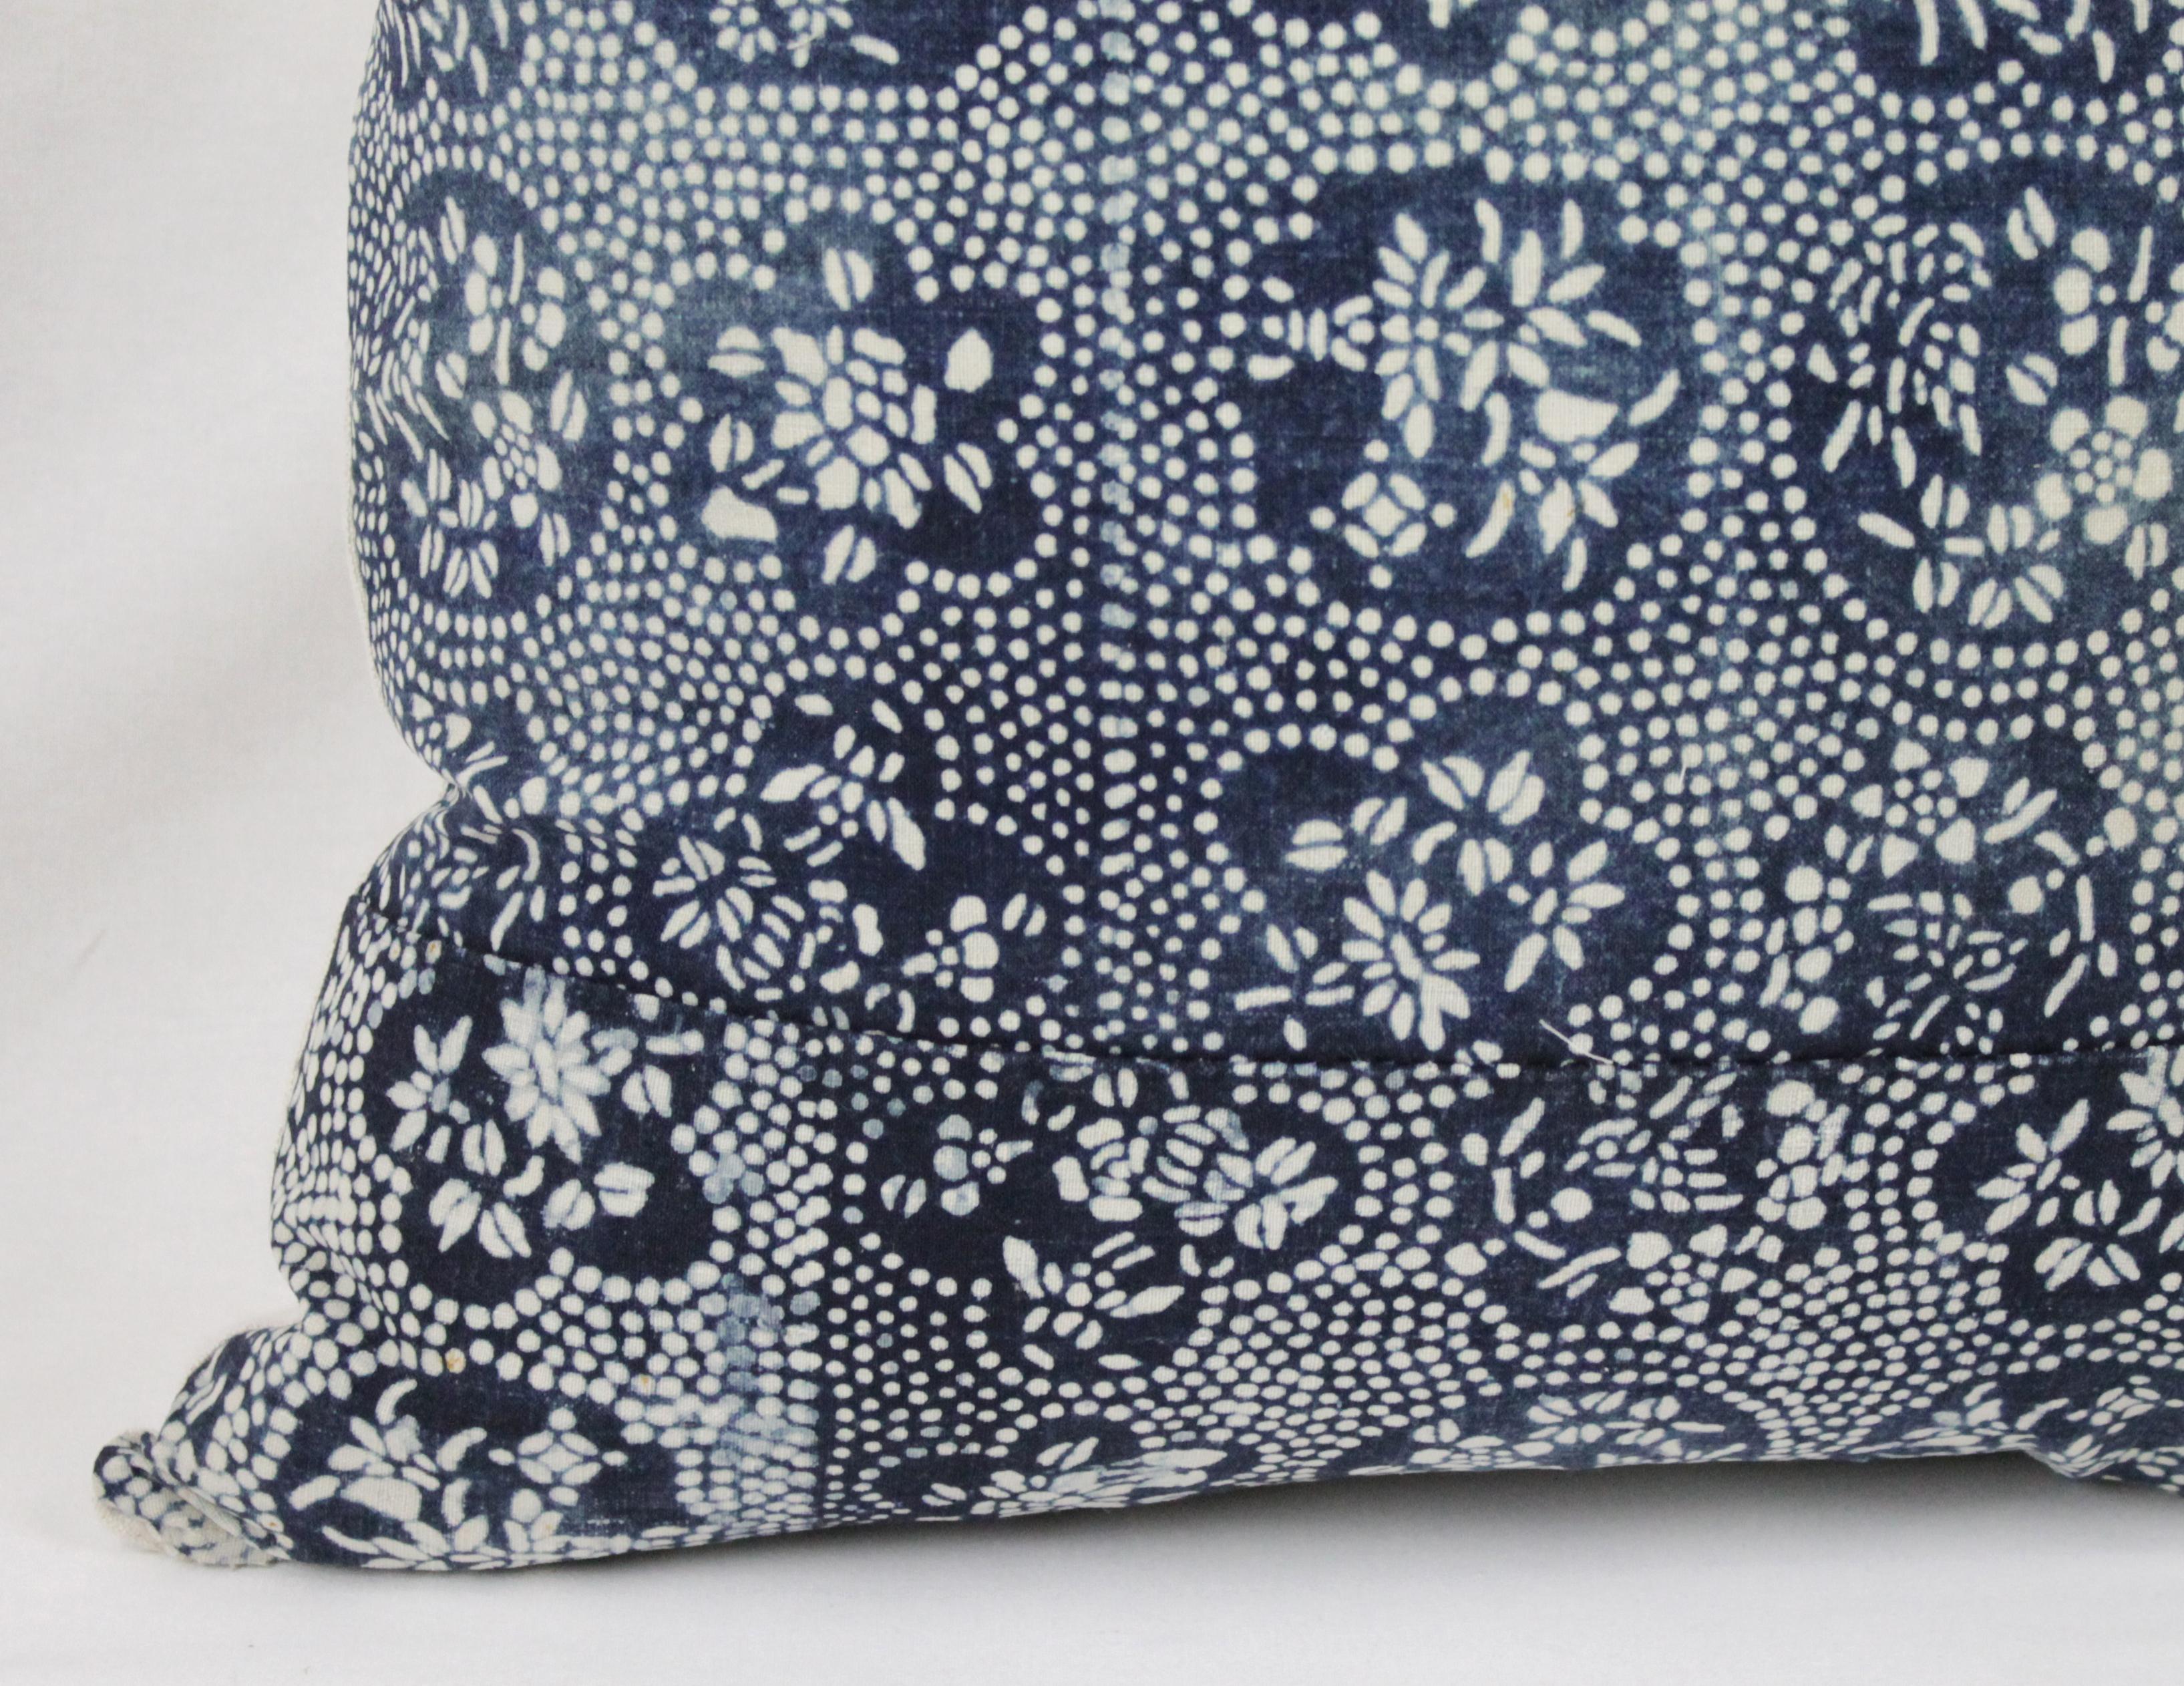 Vintage Japanese Indigo Batik Style Pillow 1